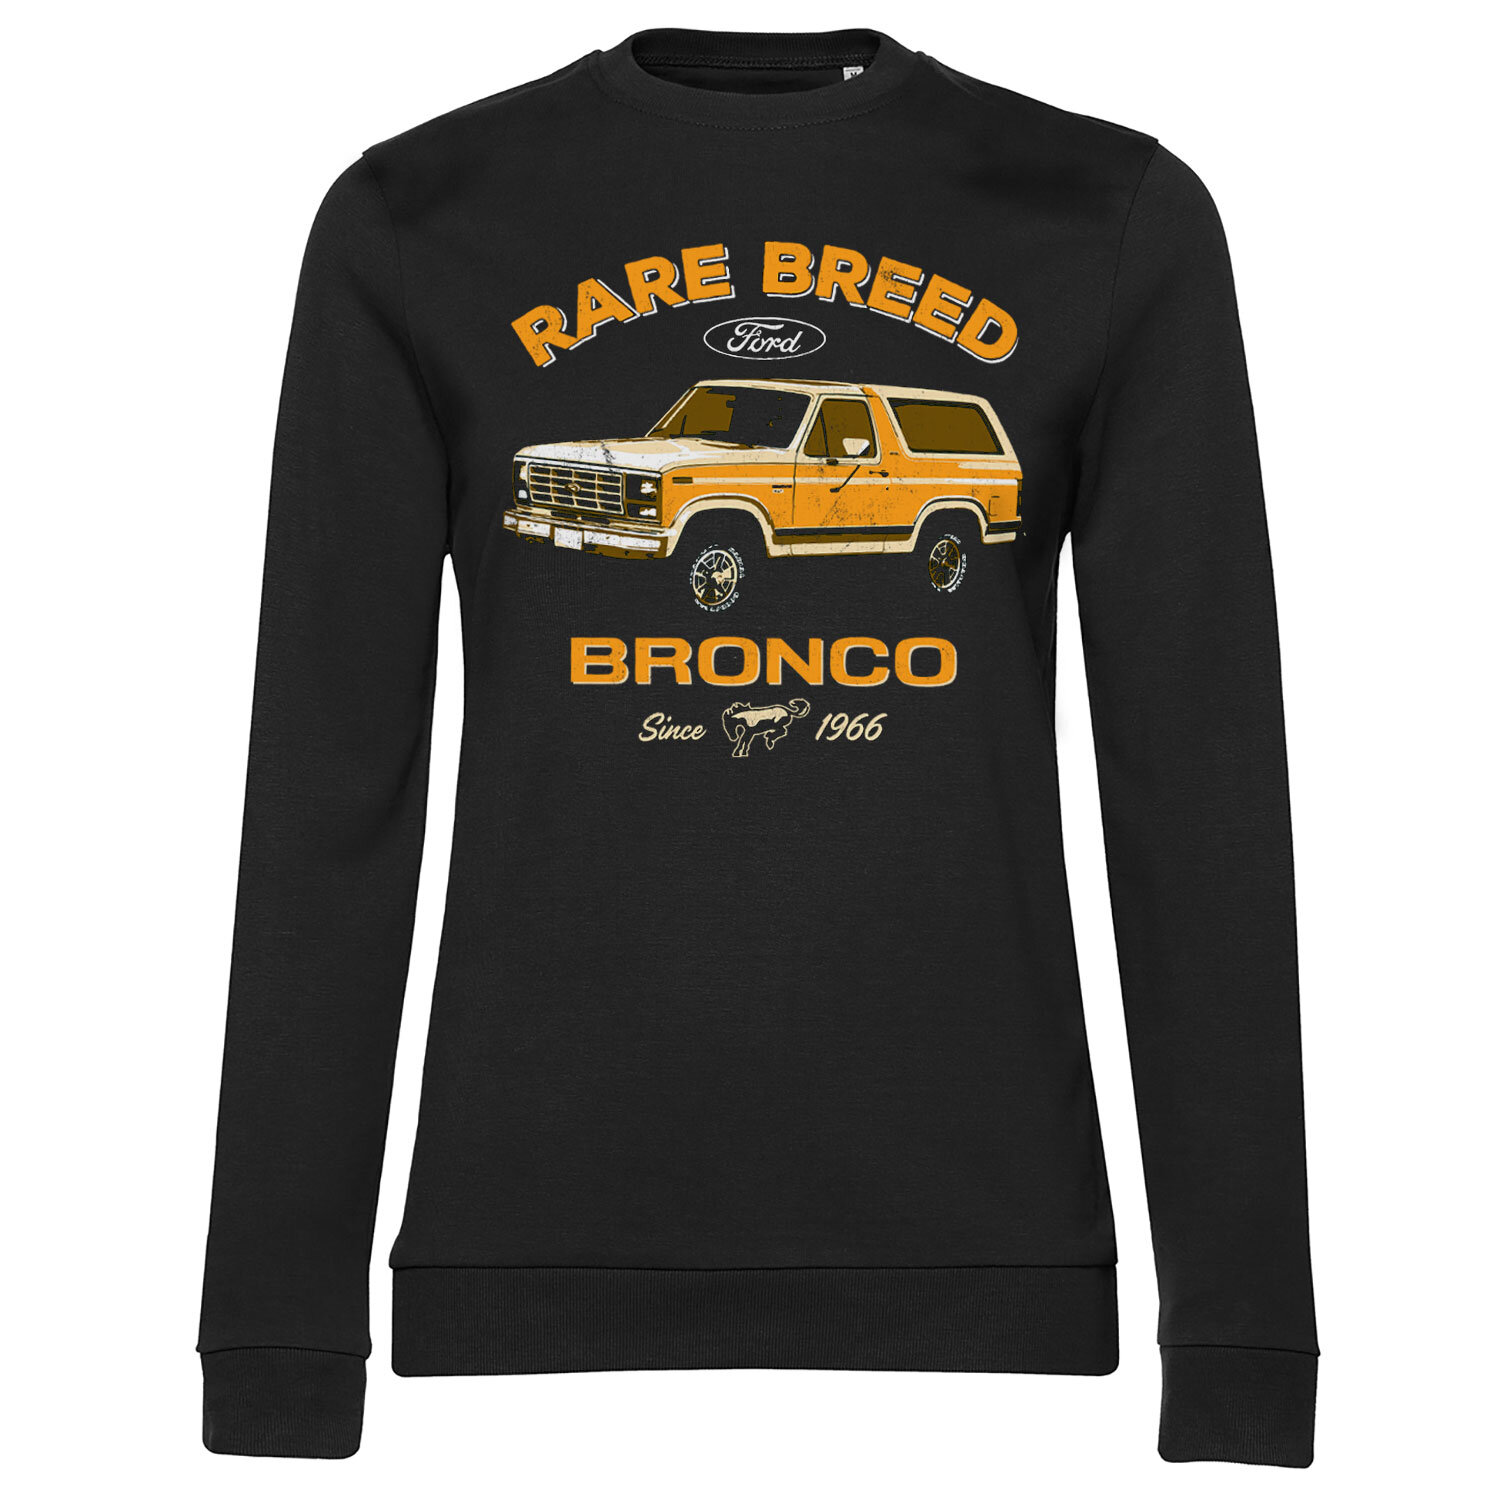 Ford Bronco - Rare Breed Girly Sweatshirt